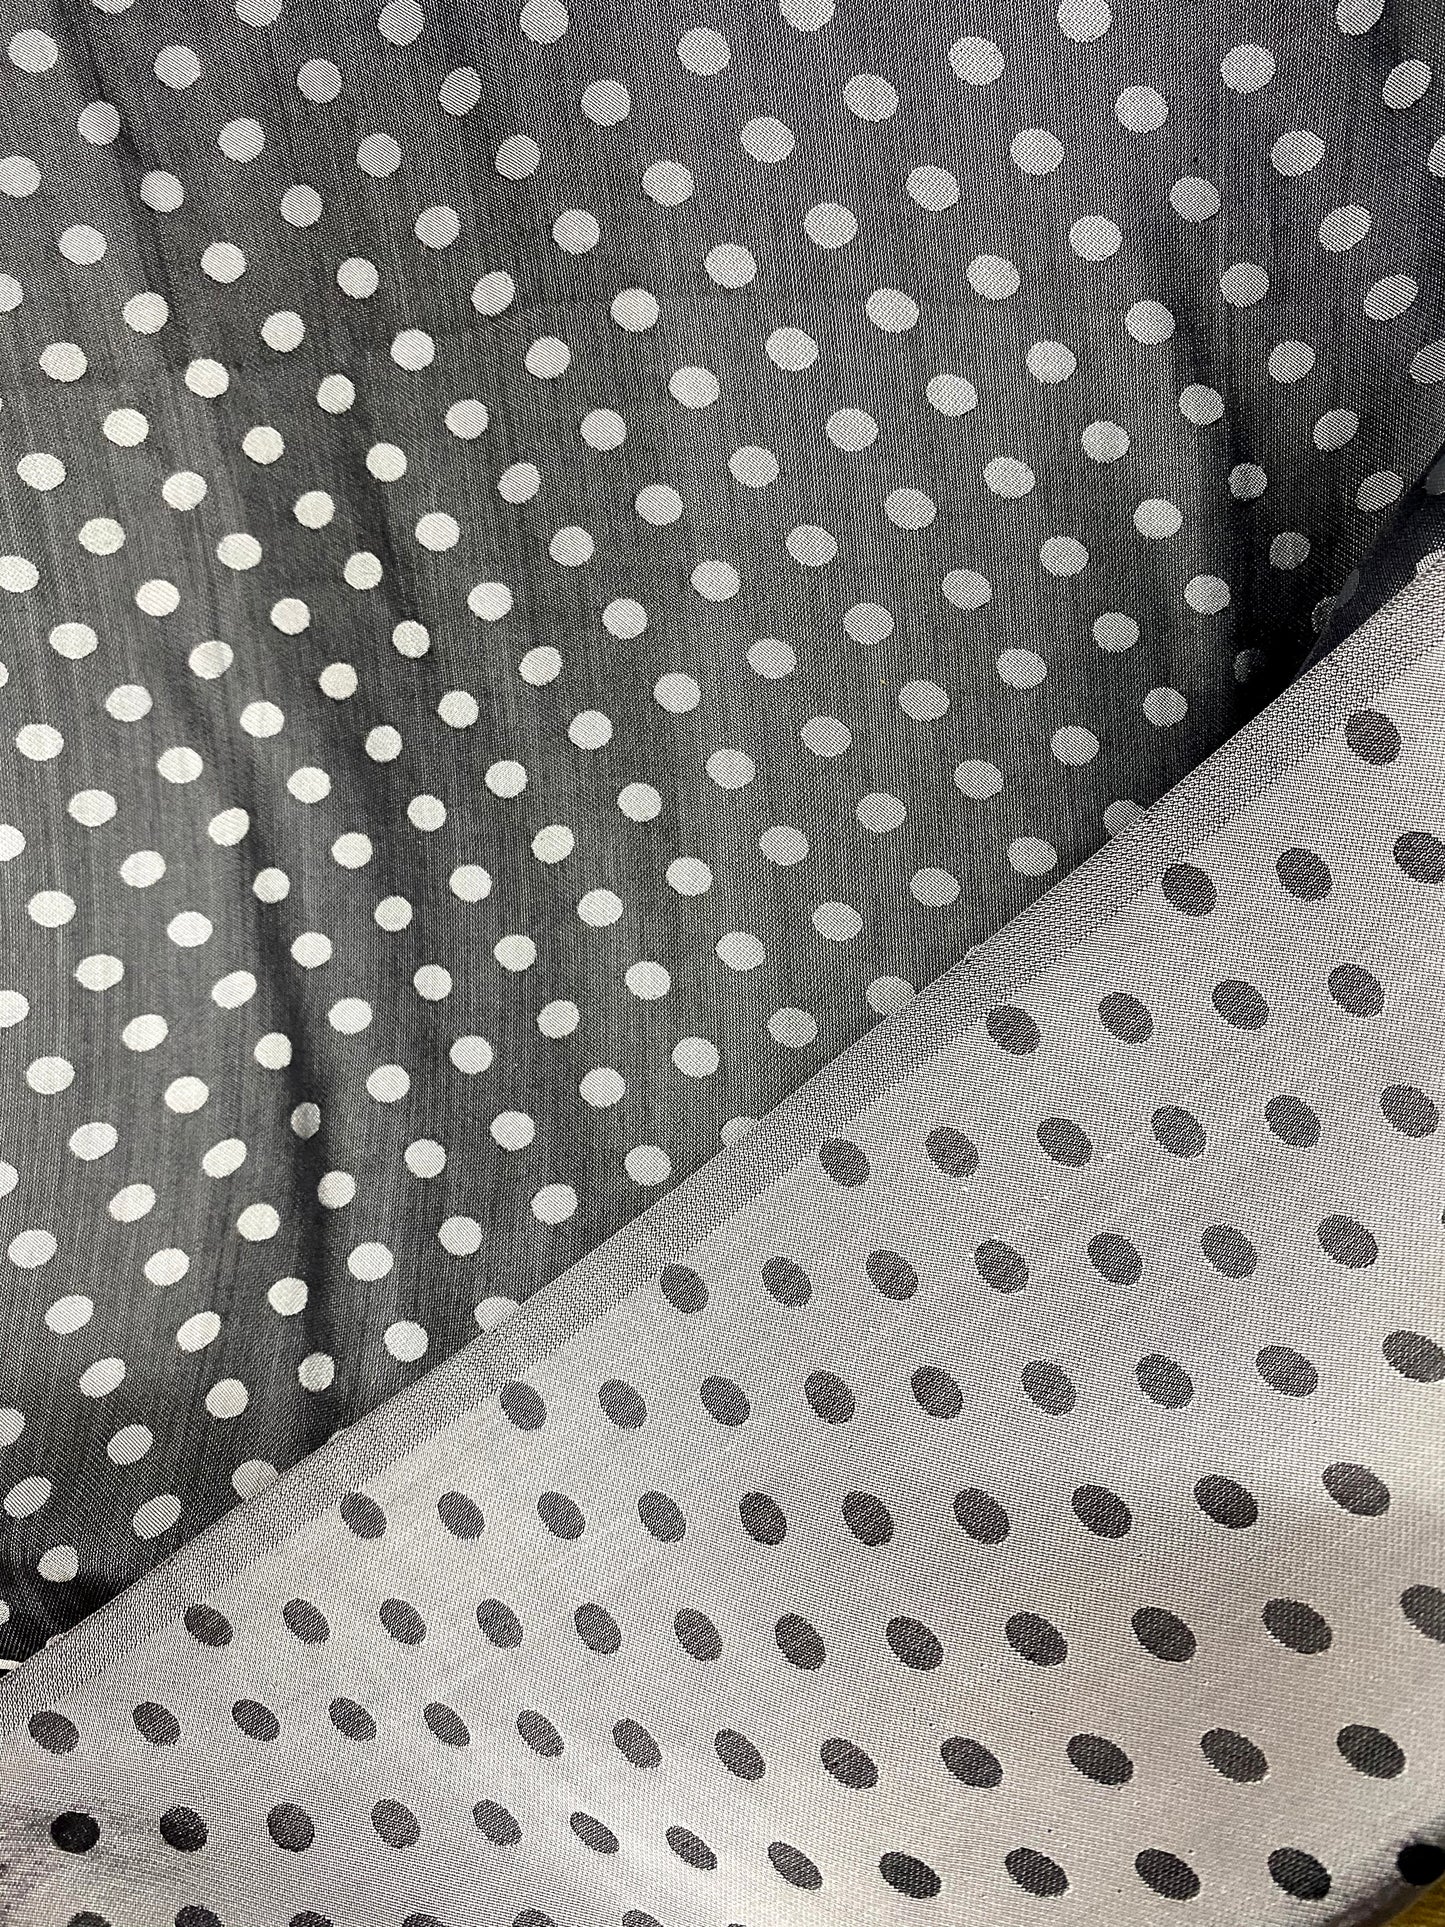 Dark grey dot silk - PURE MULBERRY SILK fabric by the yard - Polkadot silk -Luxury Silk - Natural silk - Handmade in VietNam- Silk with Design